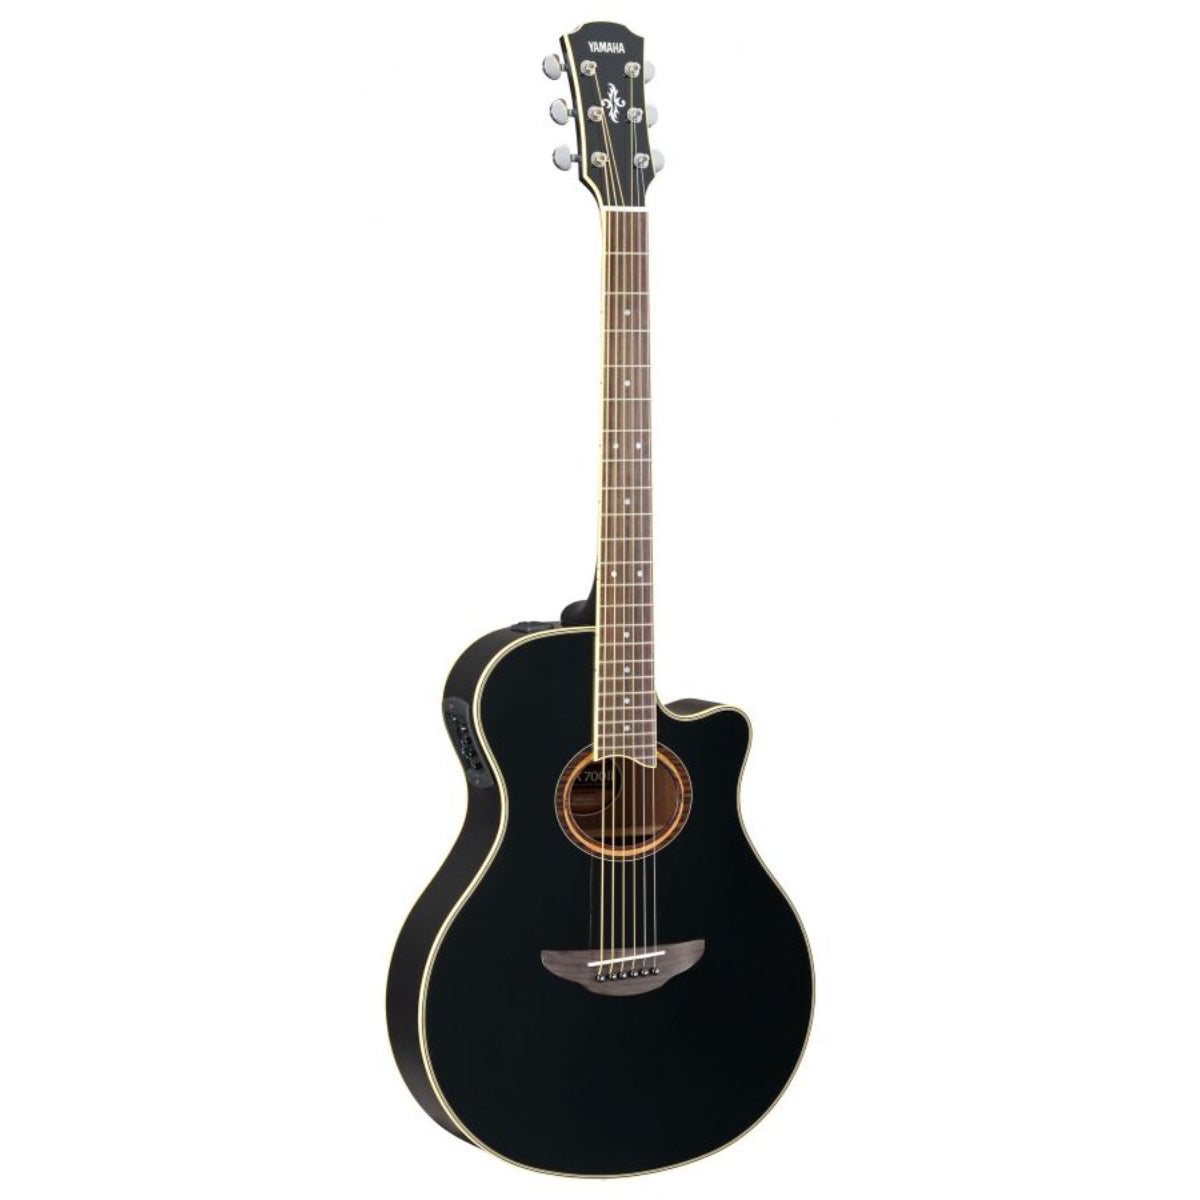 APX700II Electro-Acoustic Guitar, Black